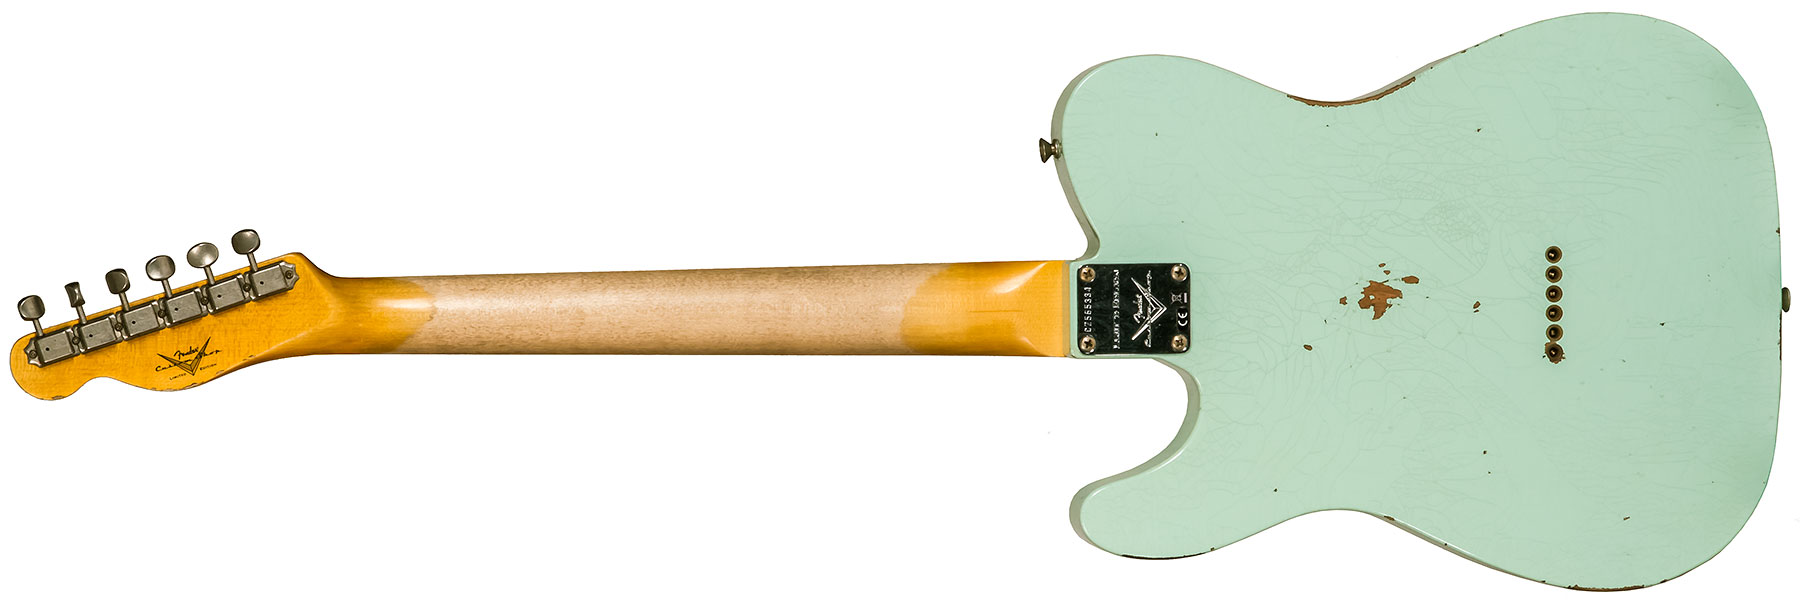 Fender Custom Shop Tele 1961 2s Ht Rw #cz565334 - Relic Faded Surf Green - Guitarra eléctrica con forma de tel - Variation 1